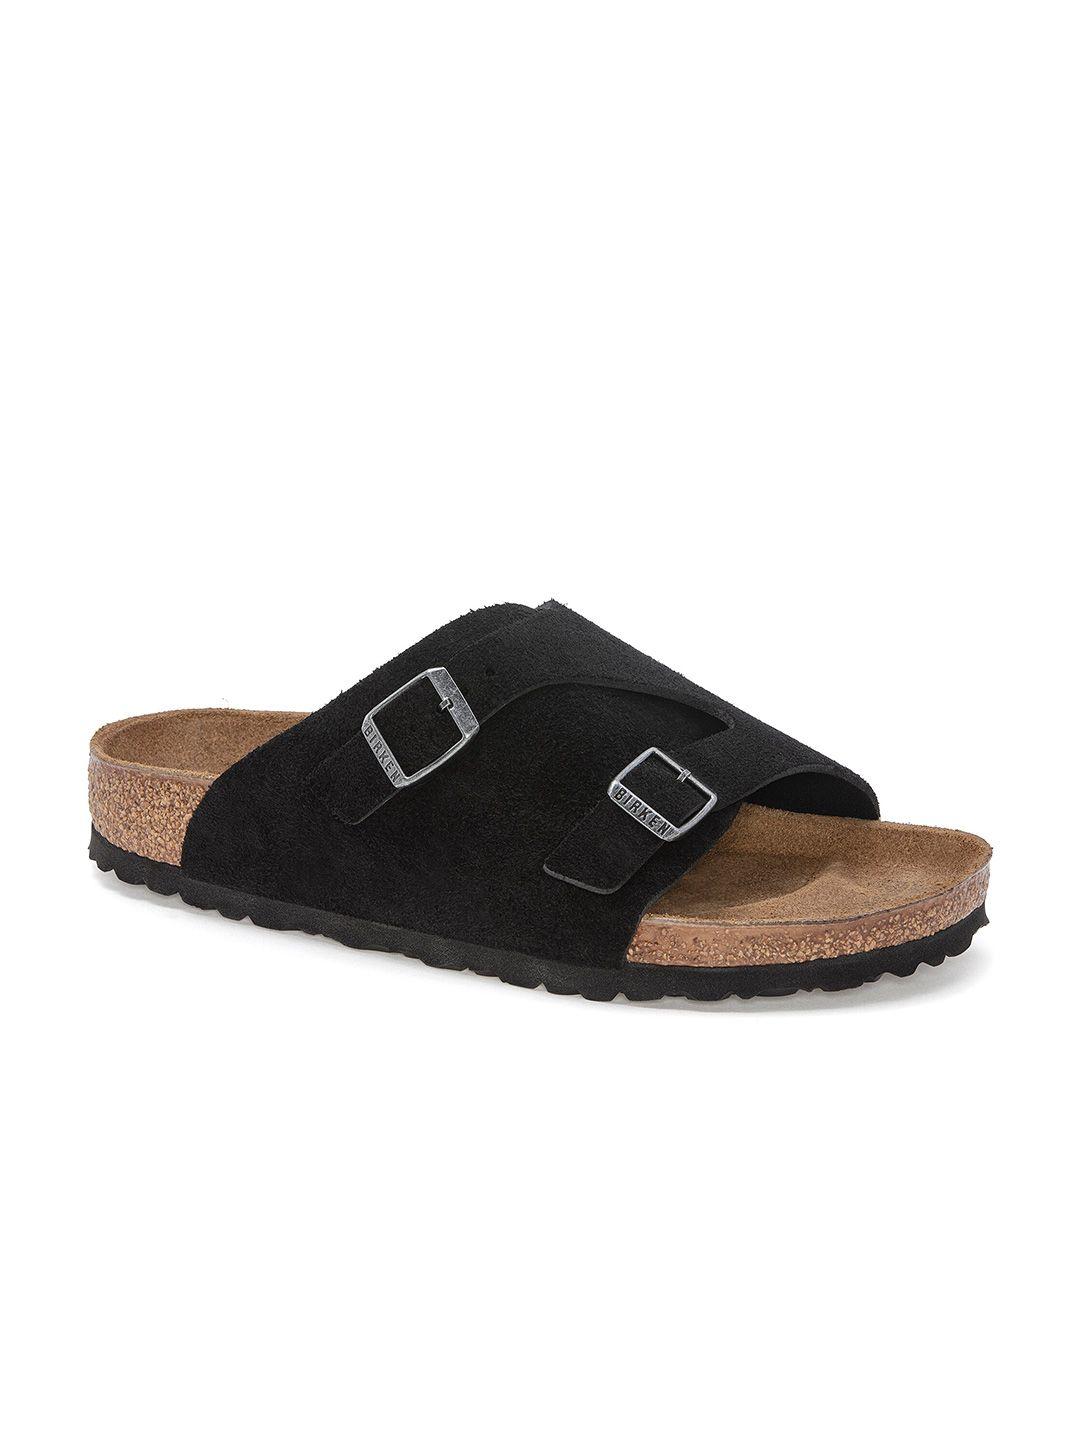 birkenstock unisex zrich regular width suede leather two-strap comfort sandals